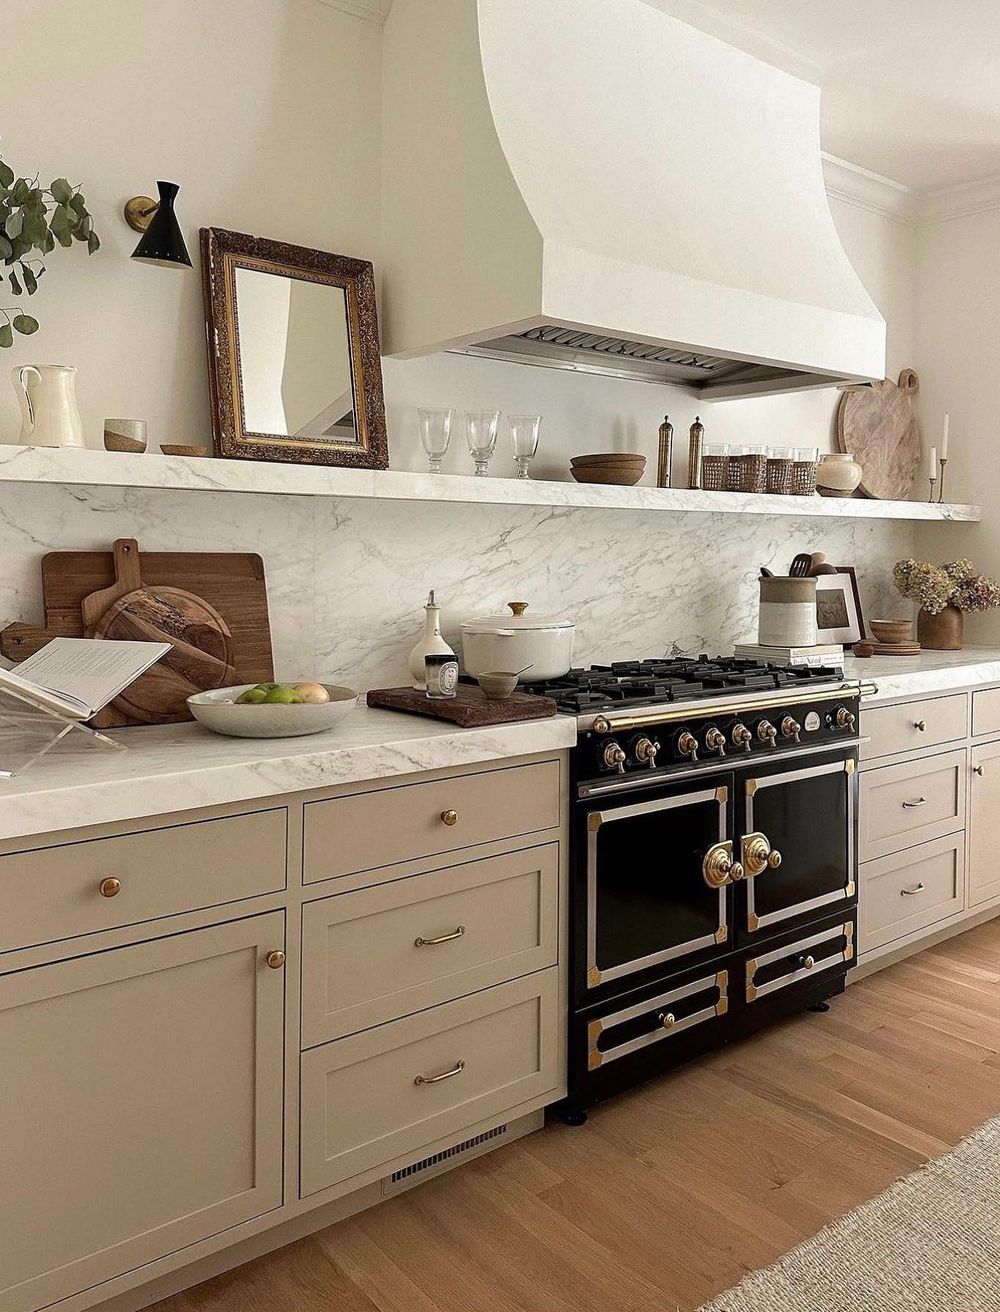 Popular kitchen cabinet colors - Beige kitchen cabinet ideas studiodearborn